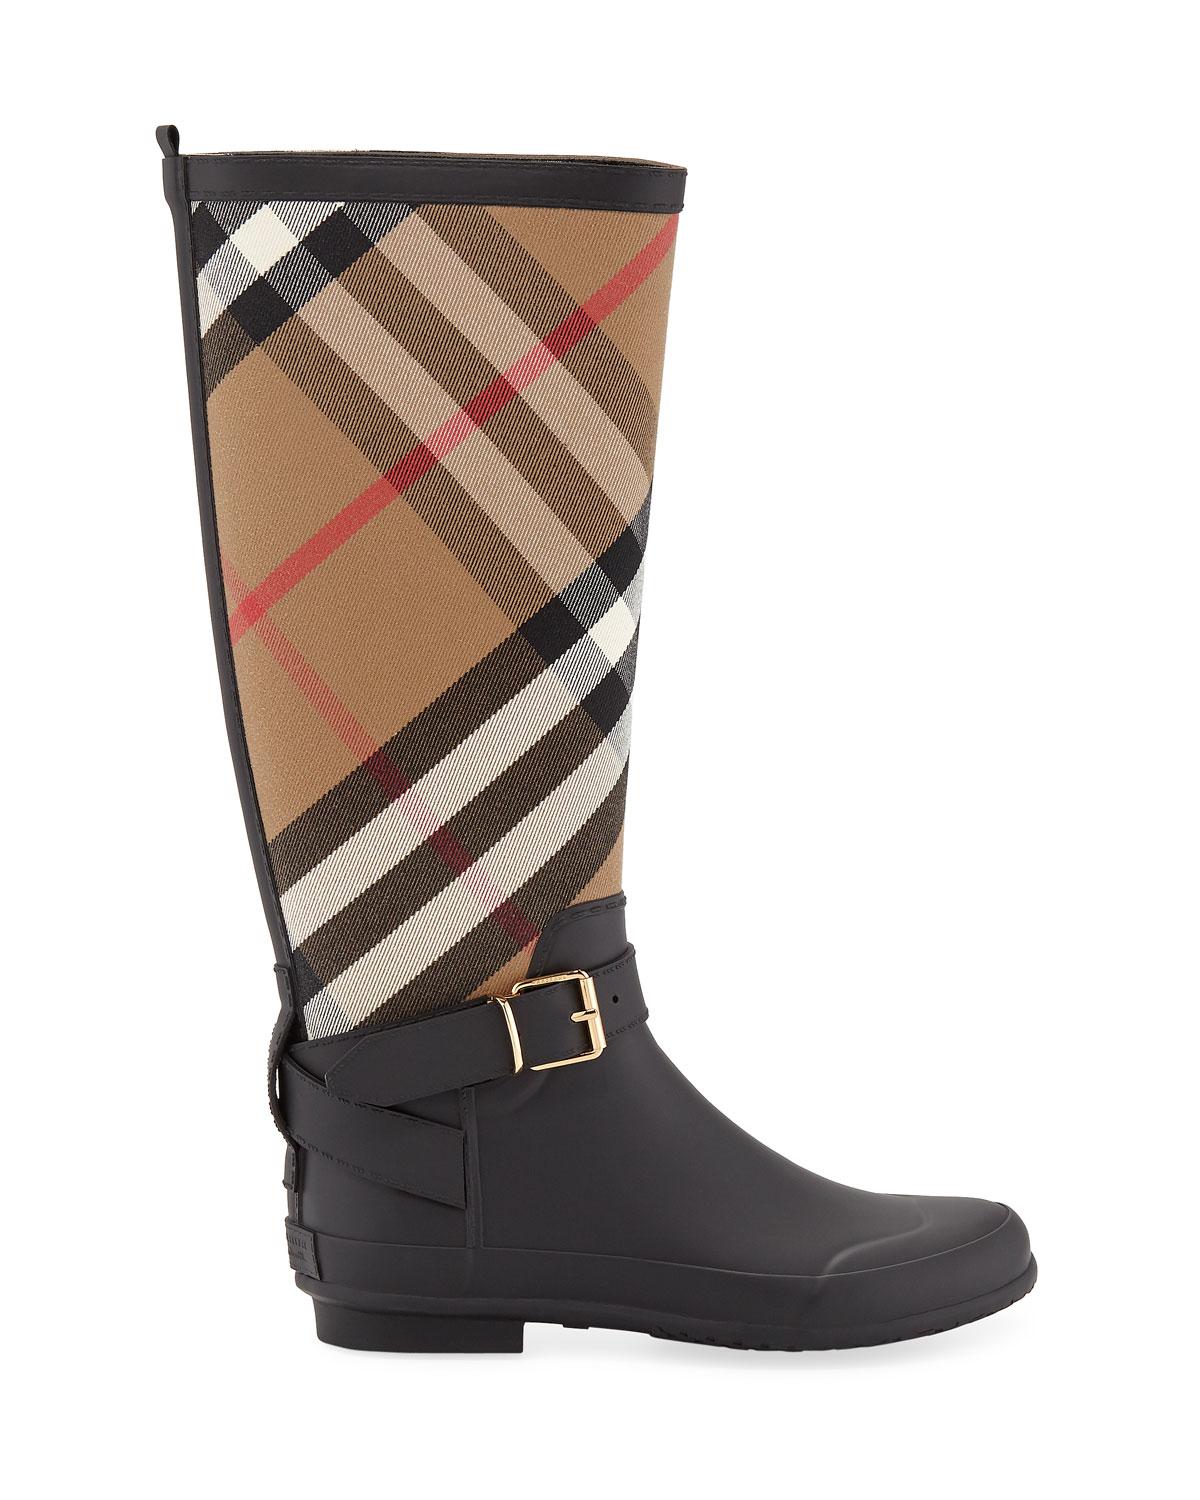 burberry rain boots size 8